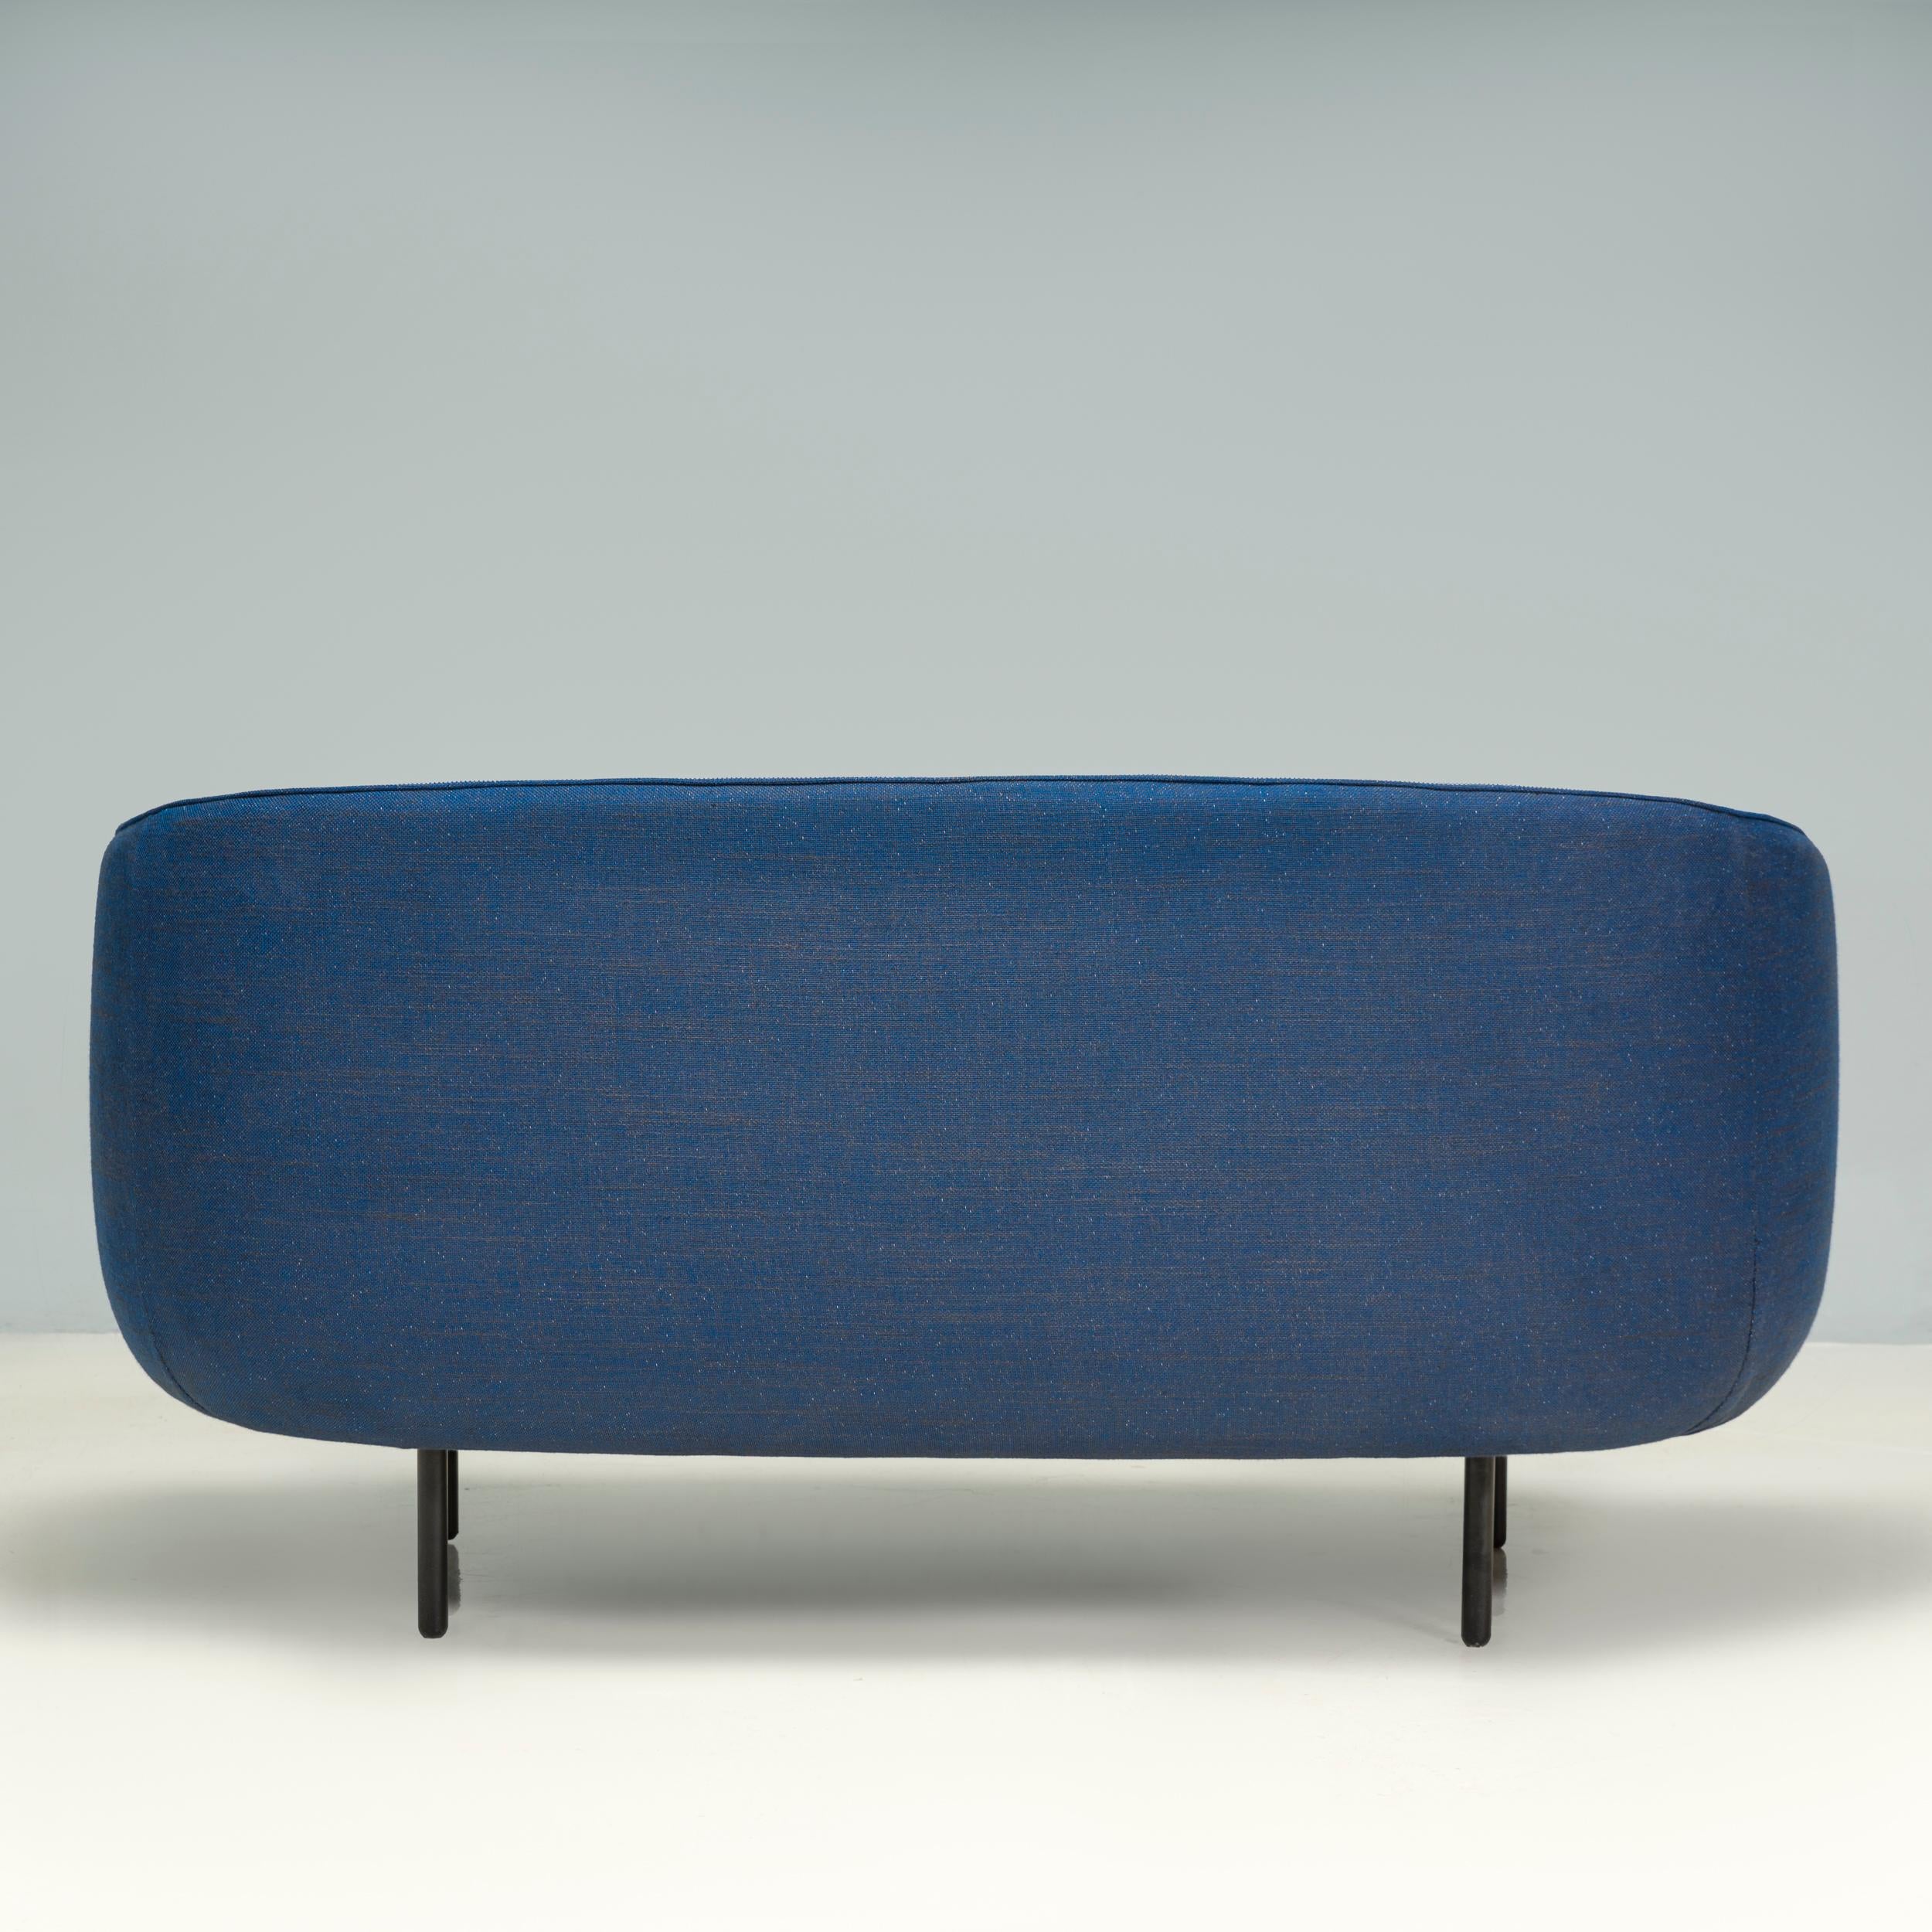 Lithuanian Fredericia by GamFratesi Two Tone Blue Fabric Haiku 2 Seater Sofa, 2018 For Sale